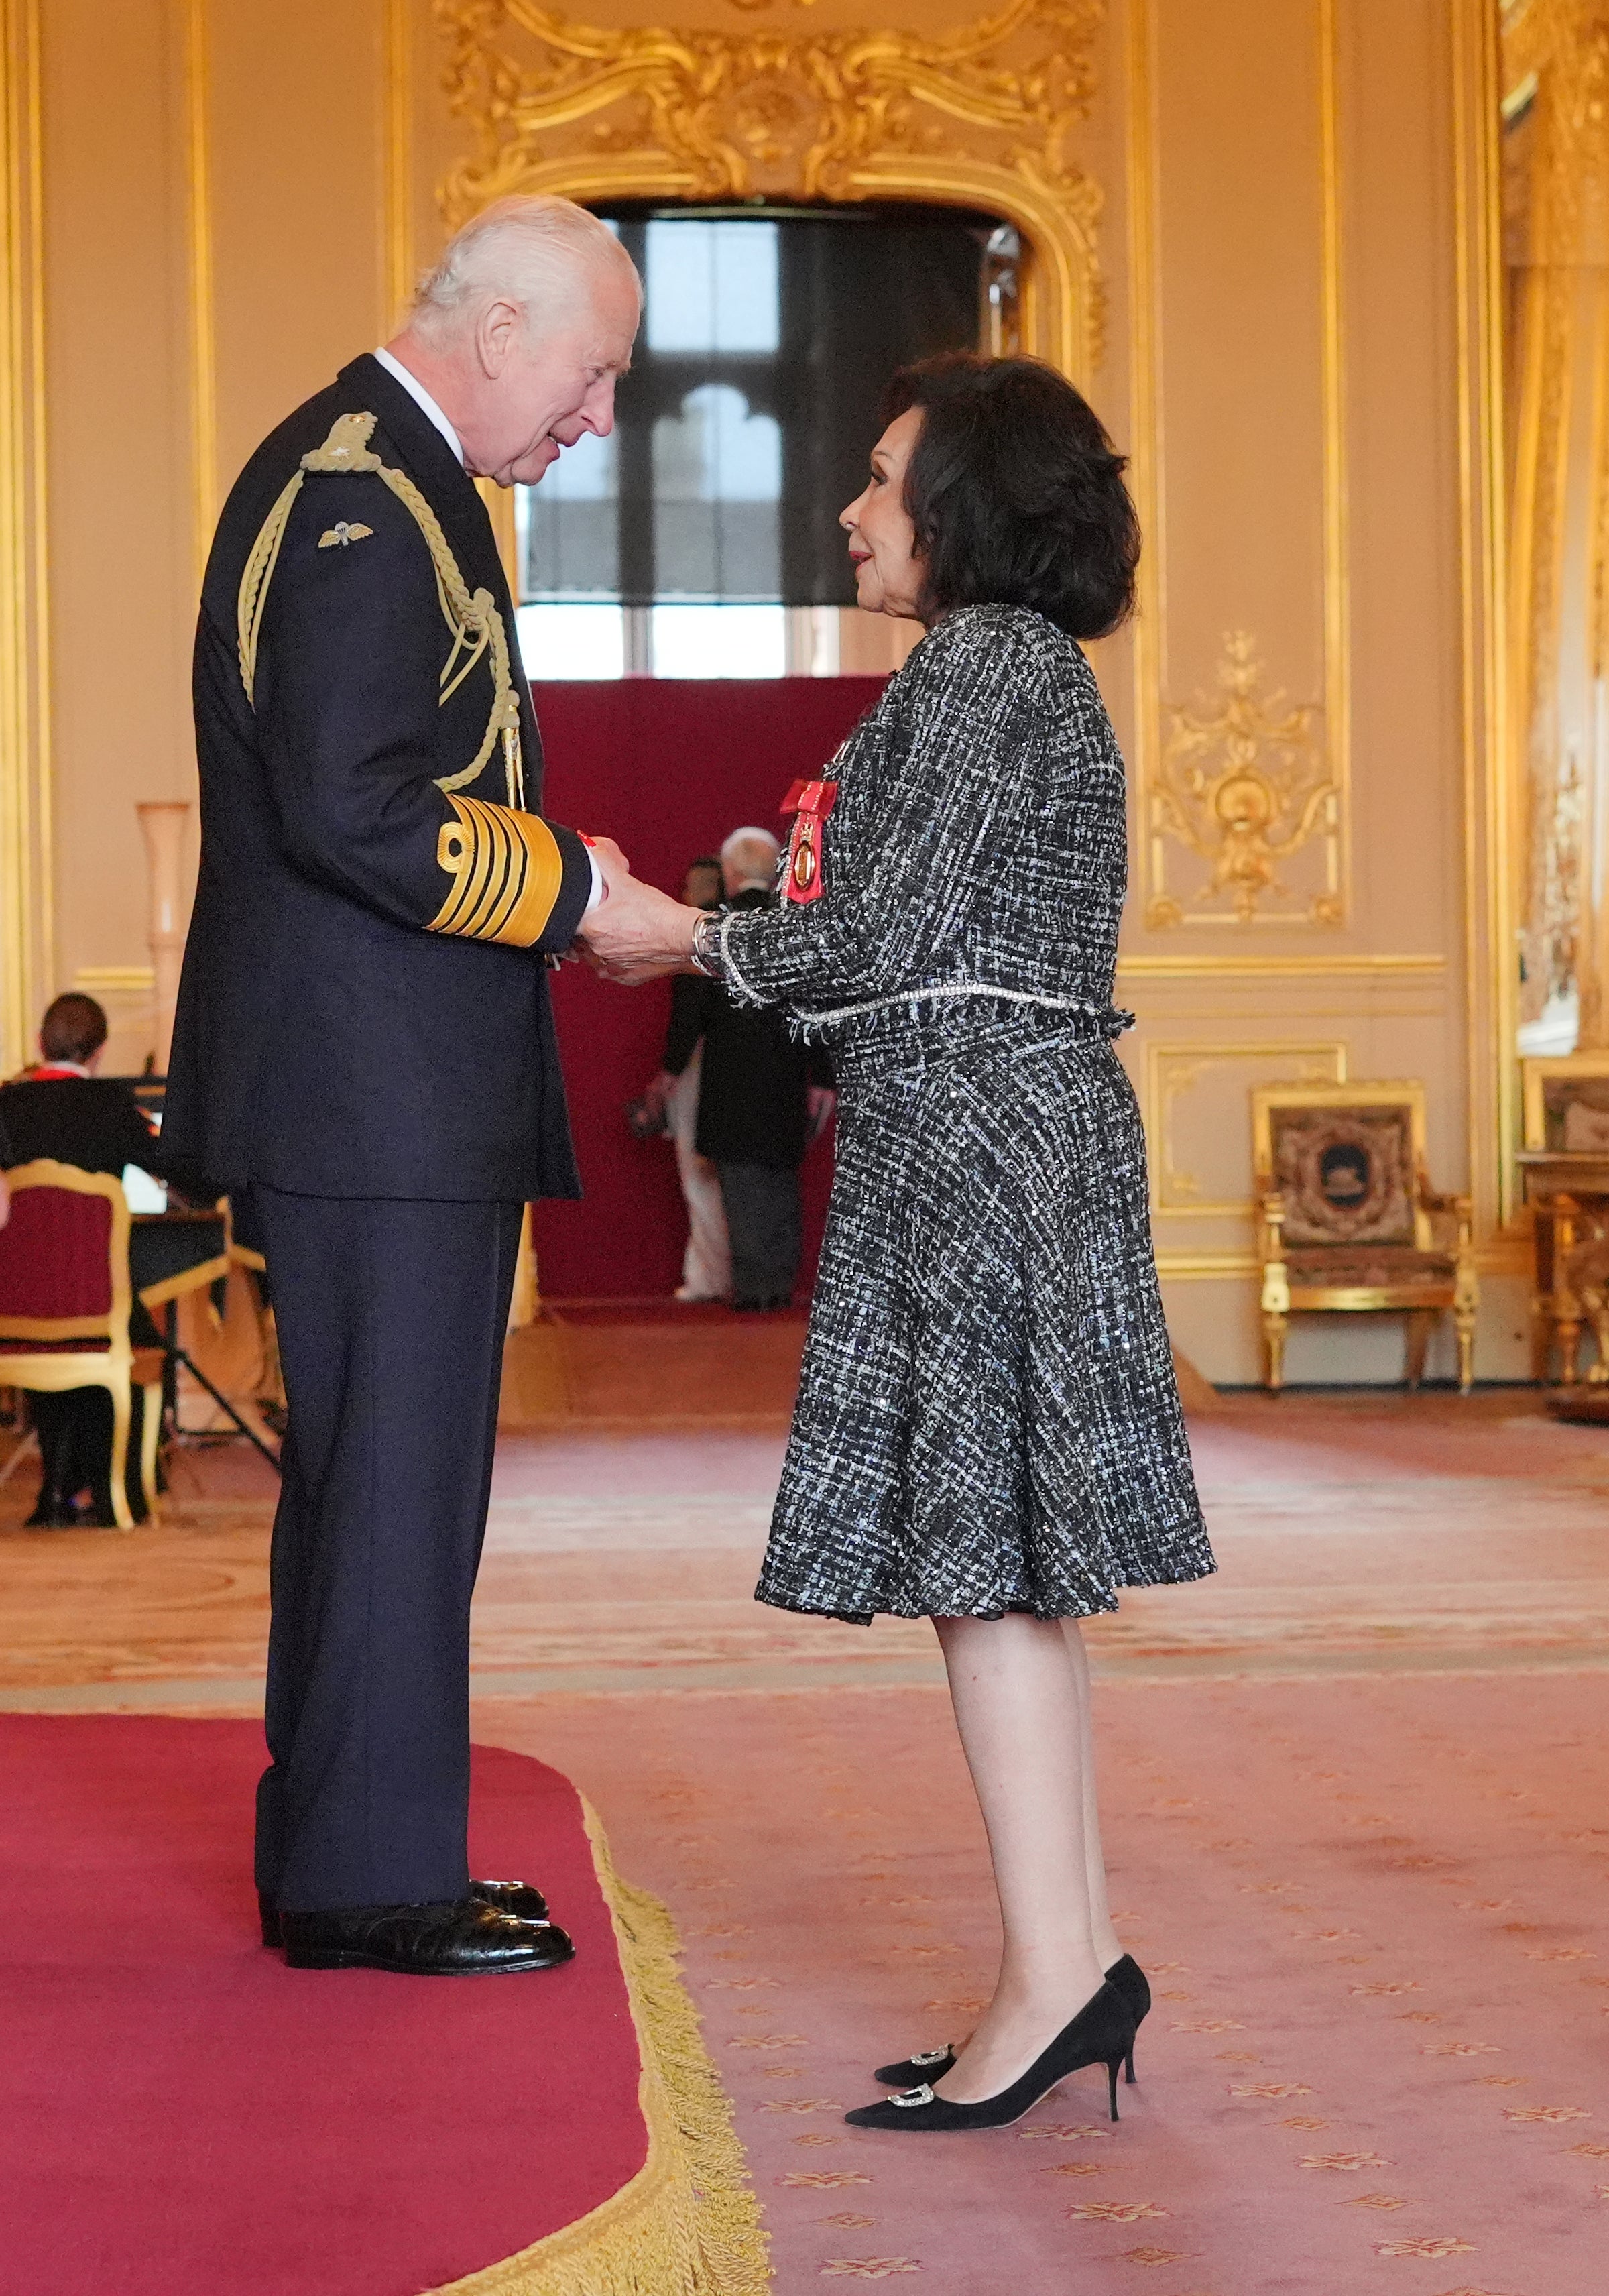 Dame Shirley Bassey said the King complimented her on her dress (Jonathan Brady/PA)